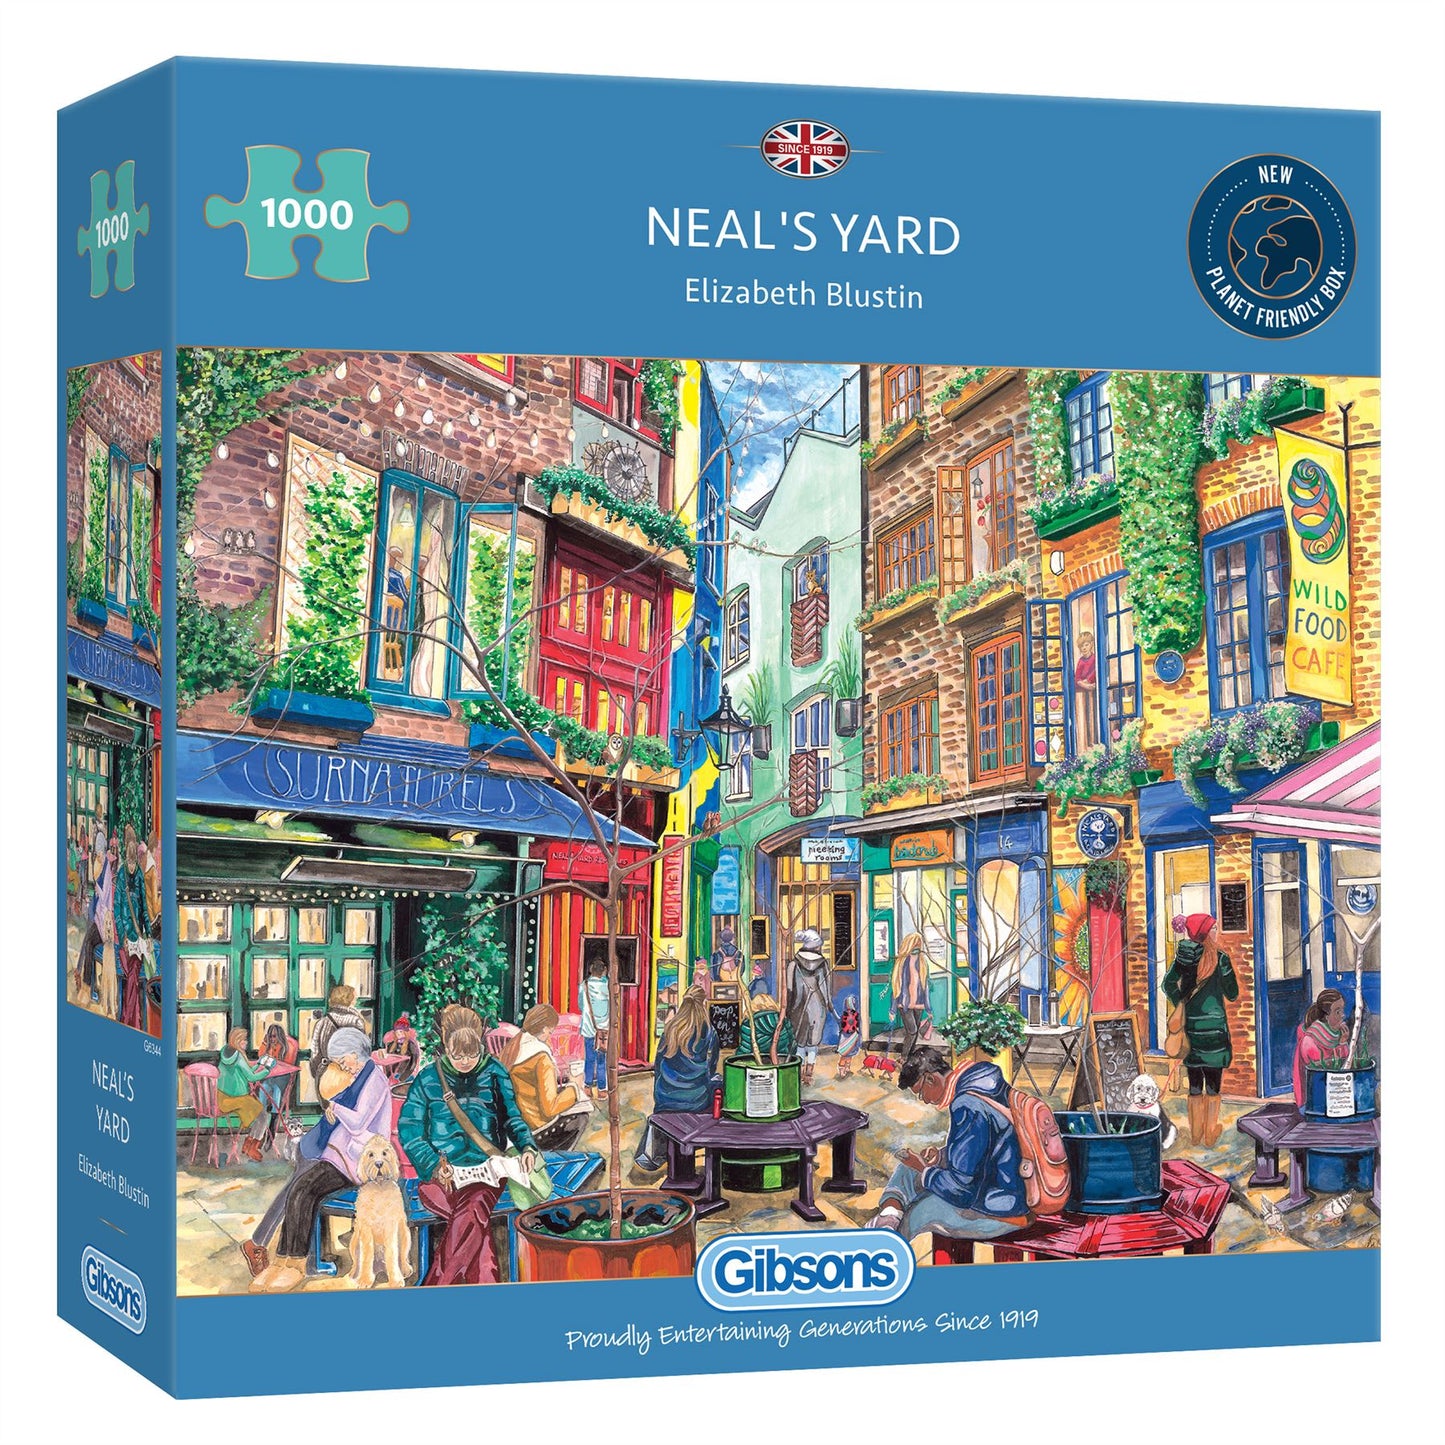 Neal's Yard 1000 Piece Jigsaw Puzzle box